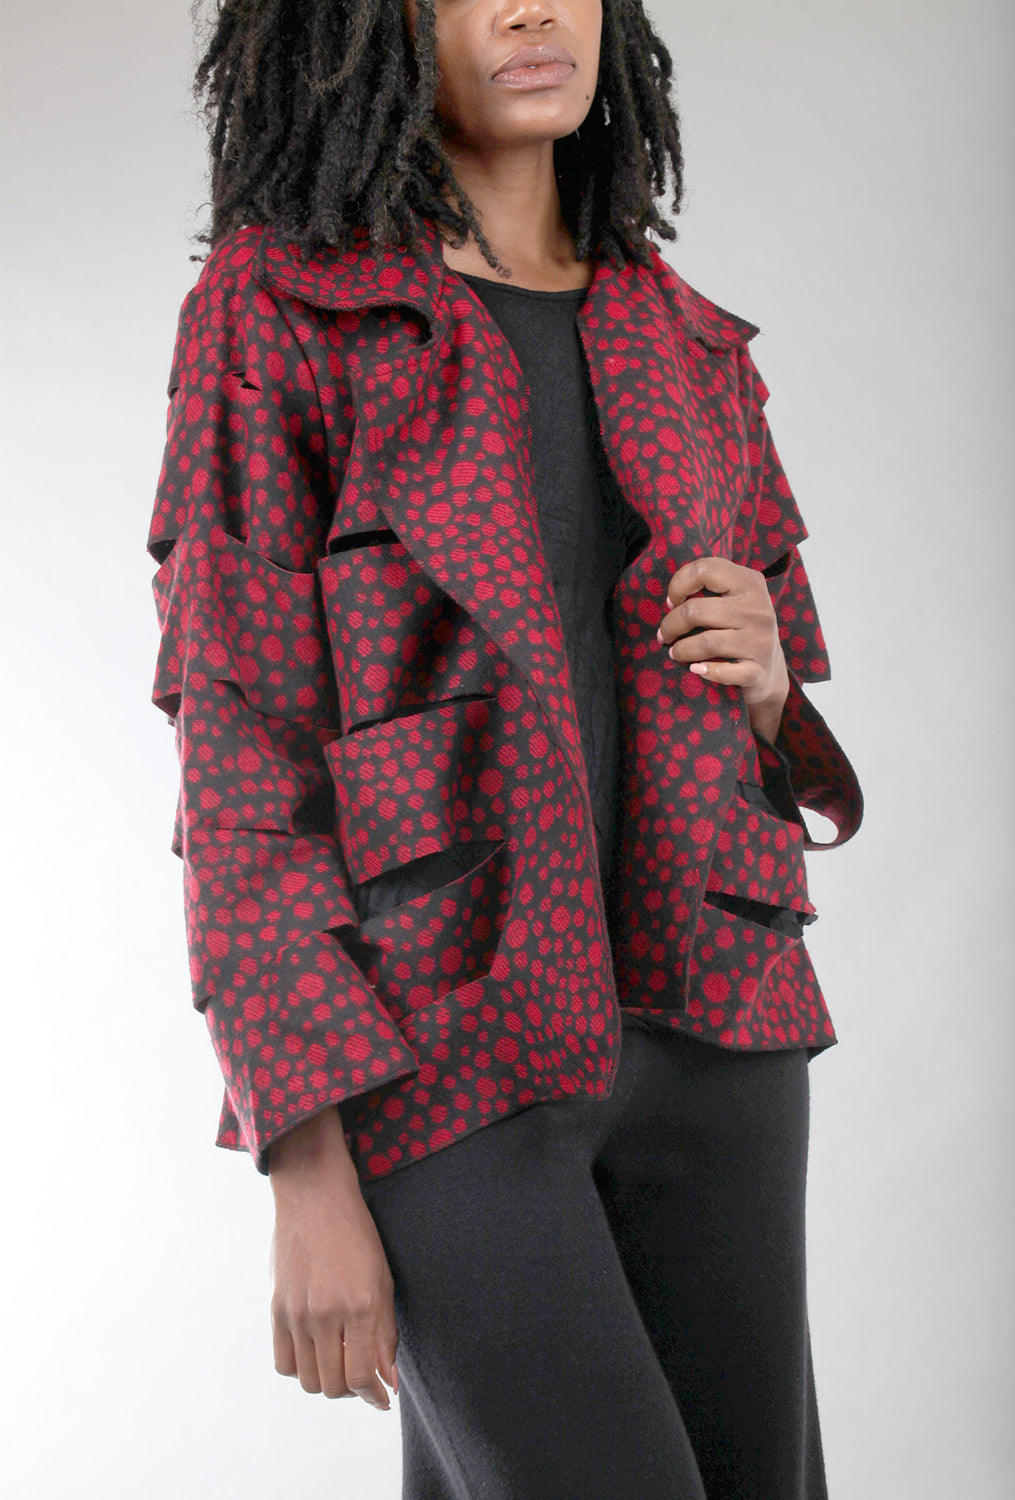 Kozan Serena Coat, Red Ladybug 